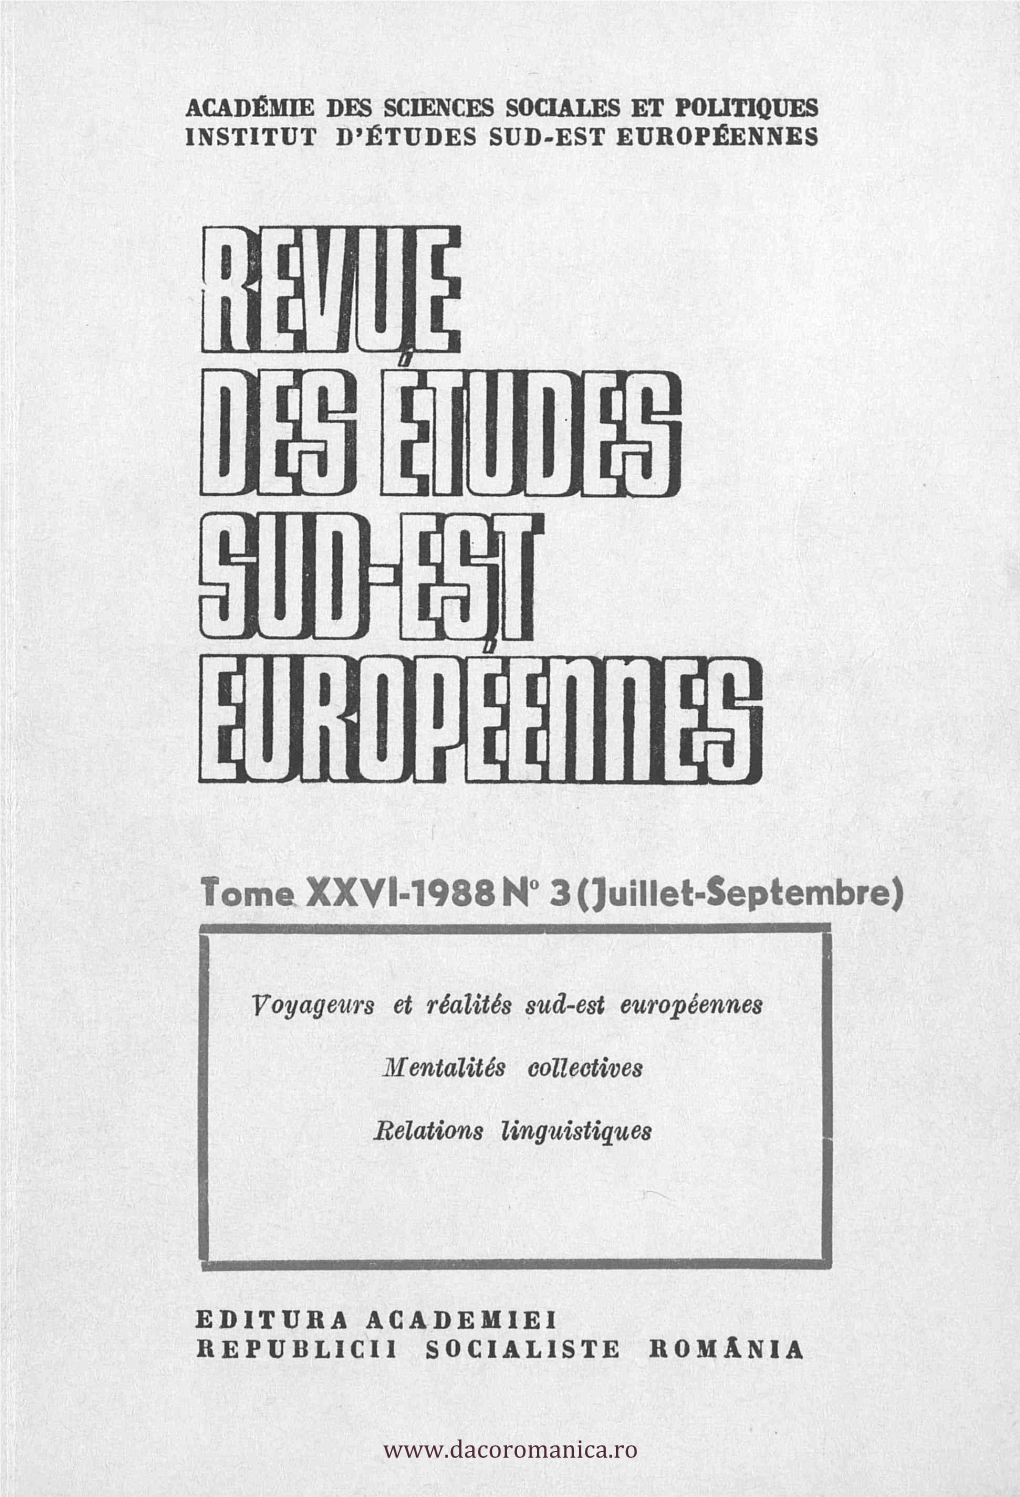 Me XXVI-1988 N° 3 (Juillet-Septembre) REPUBLICII SOCIALISTE ROMANIA